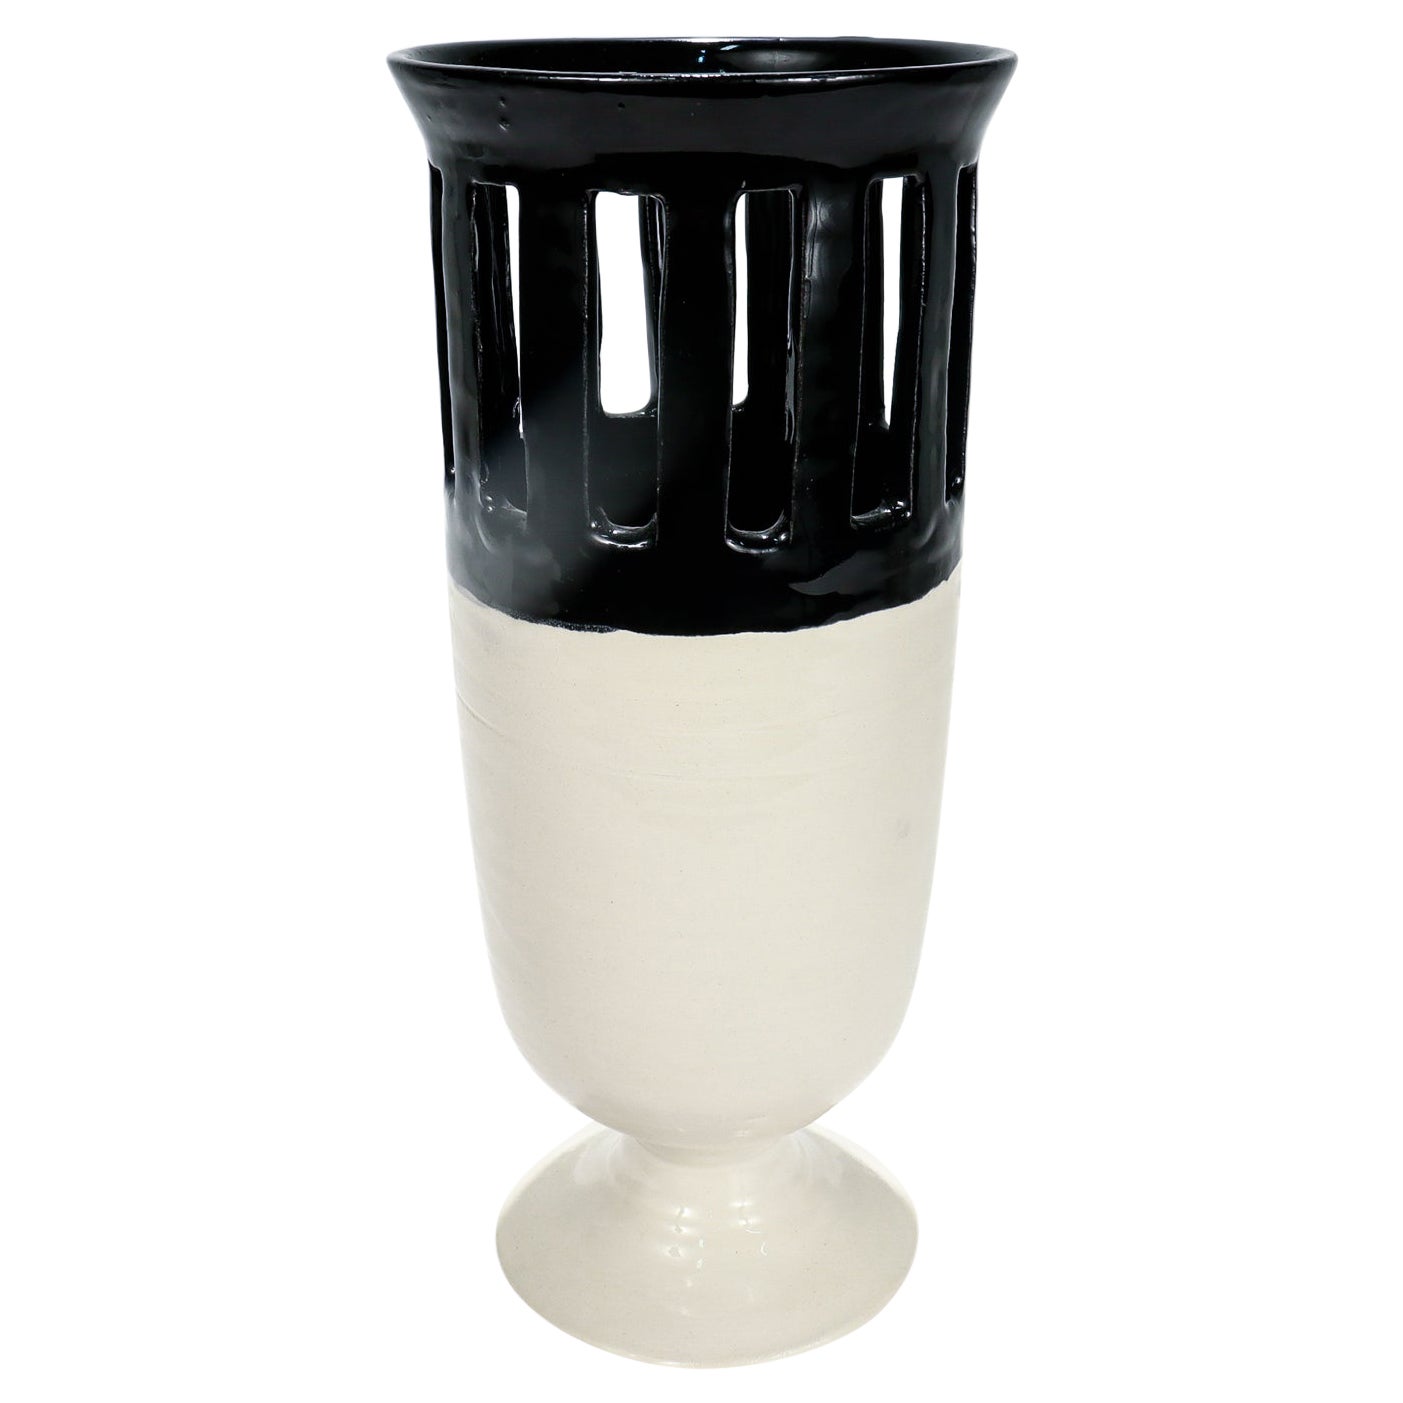 Frances Palmer Secessionist Inspired Tall Creamware Studio Pottery Vase